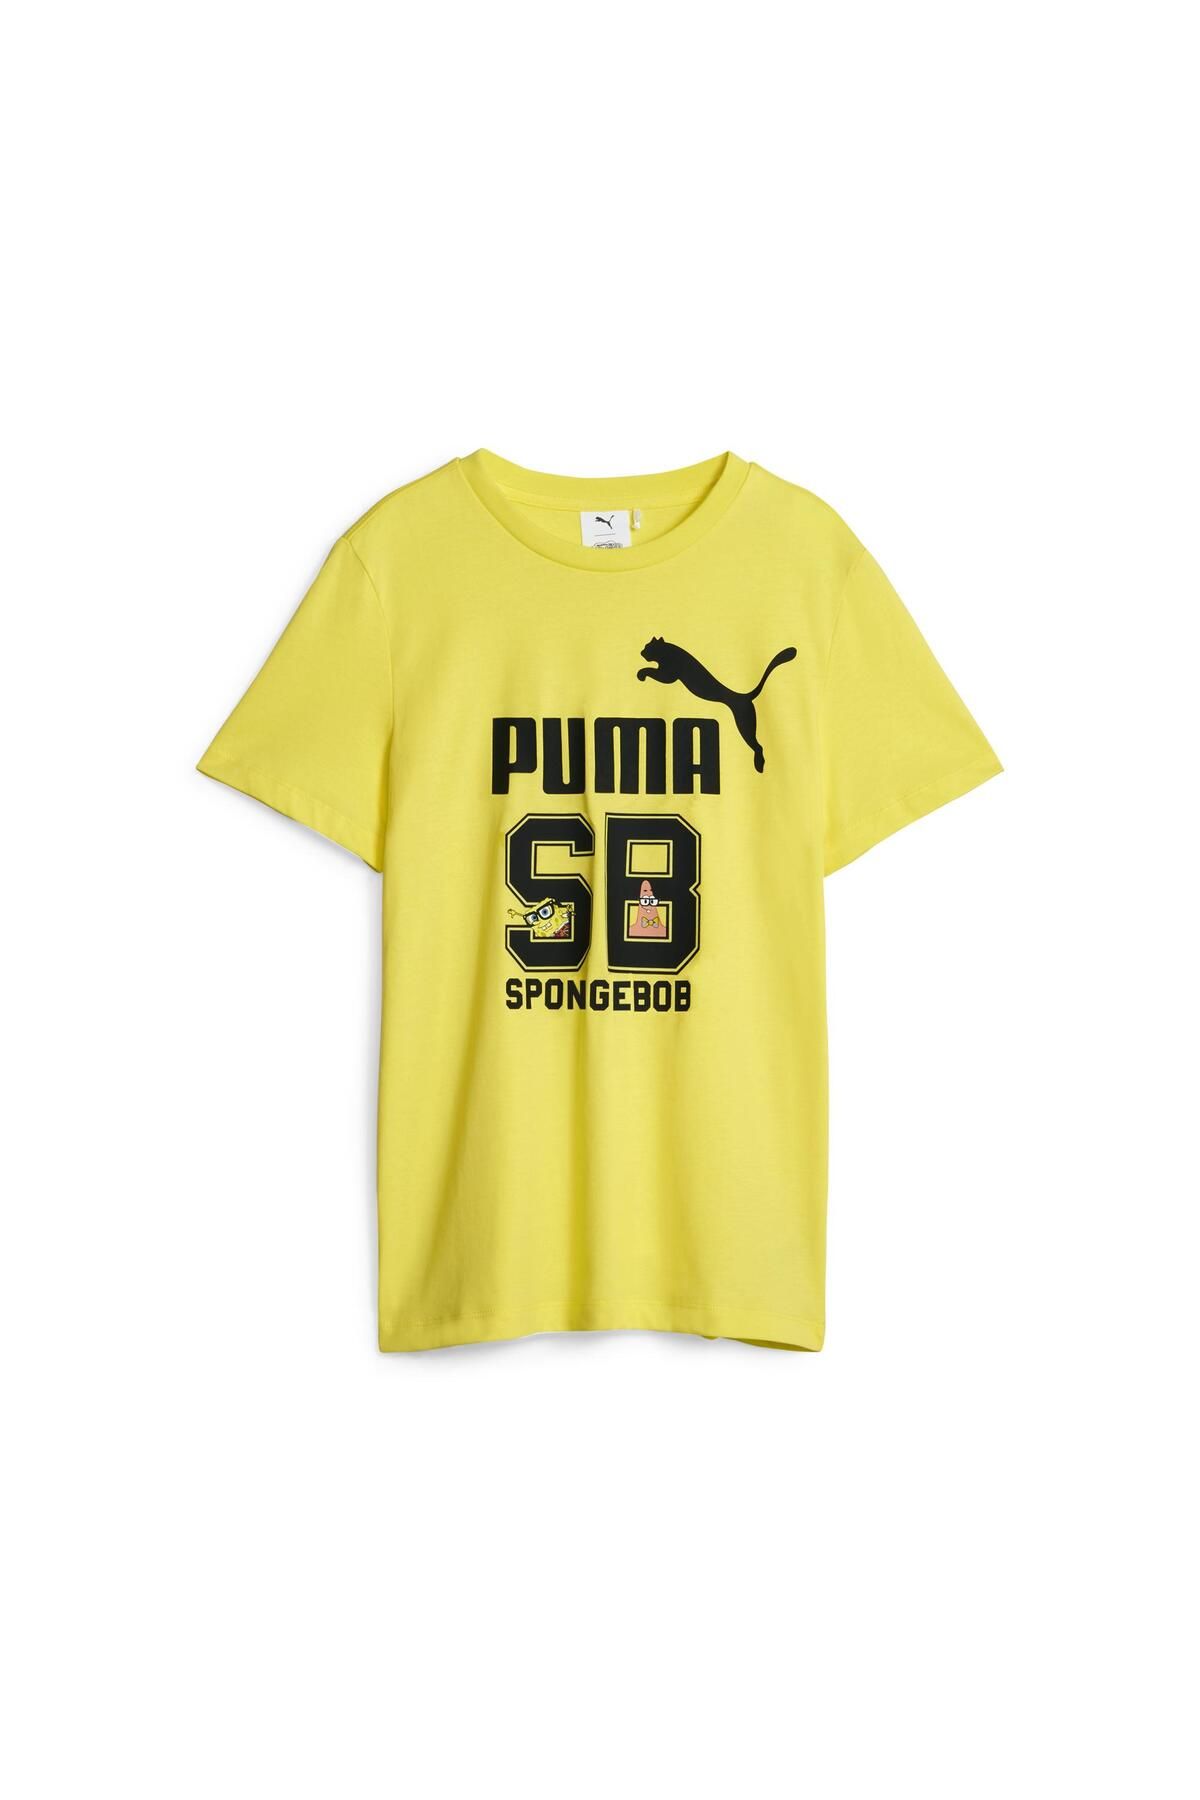 Puma X SPONGEBOB Tee